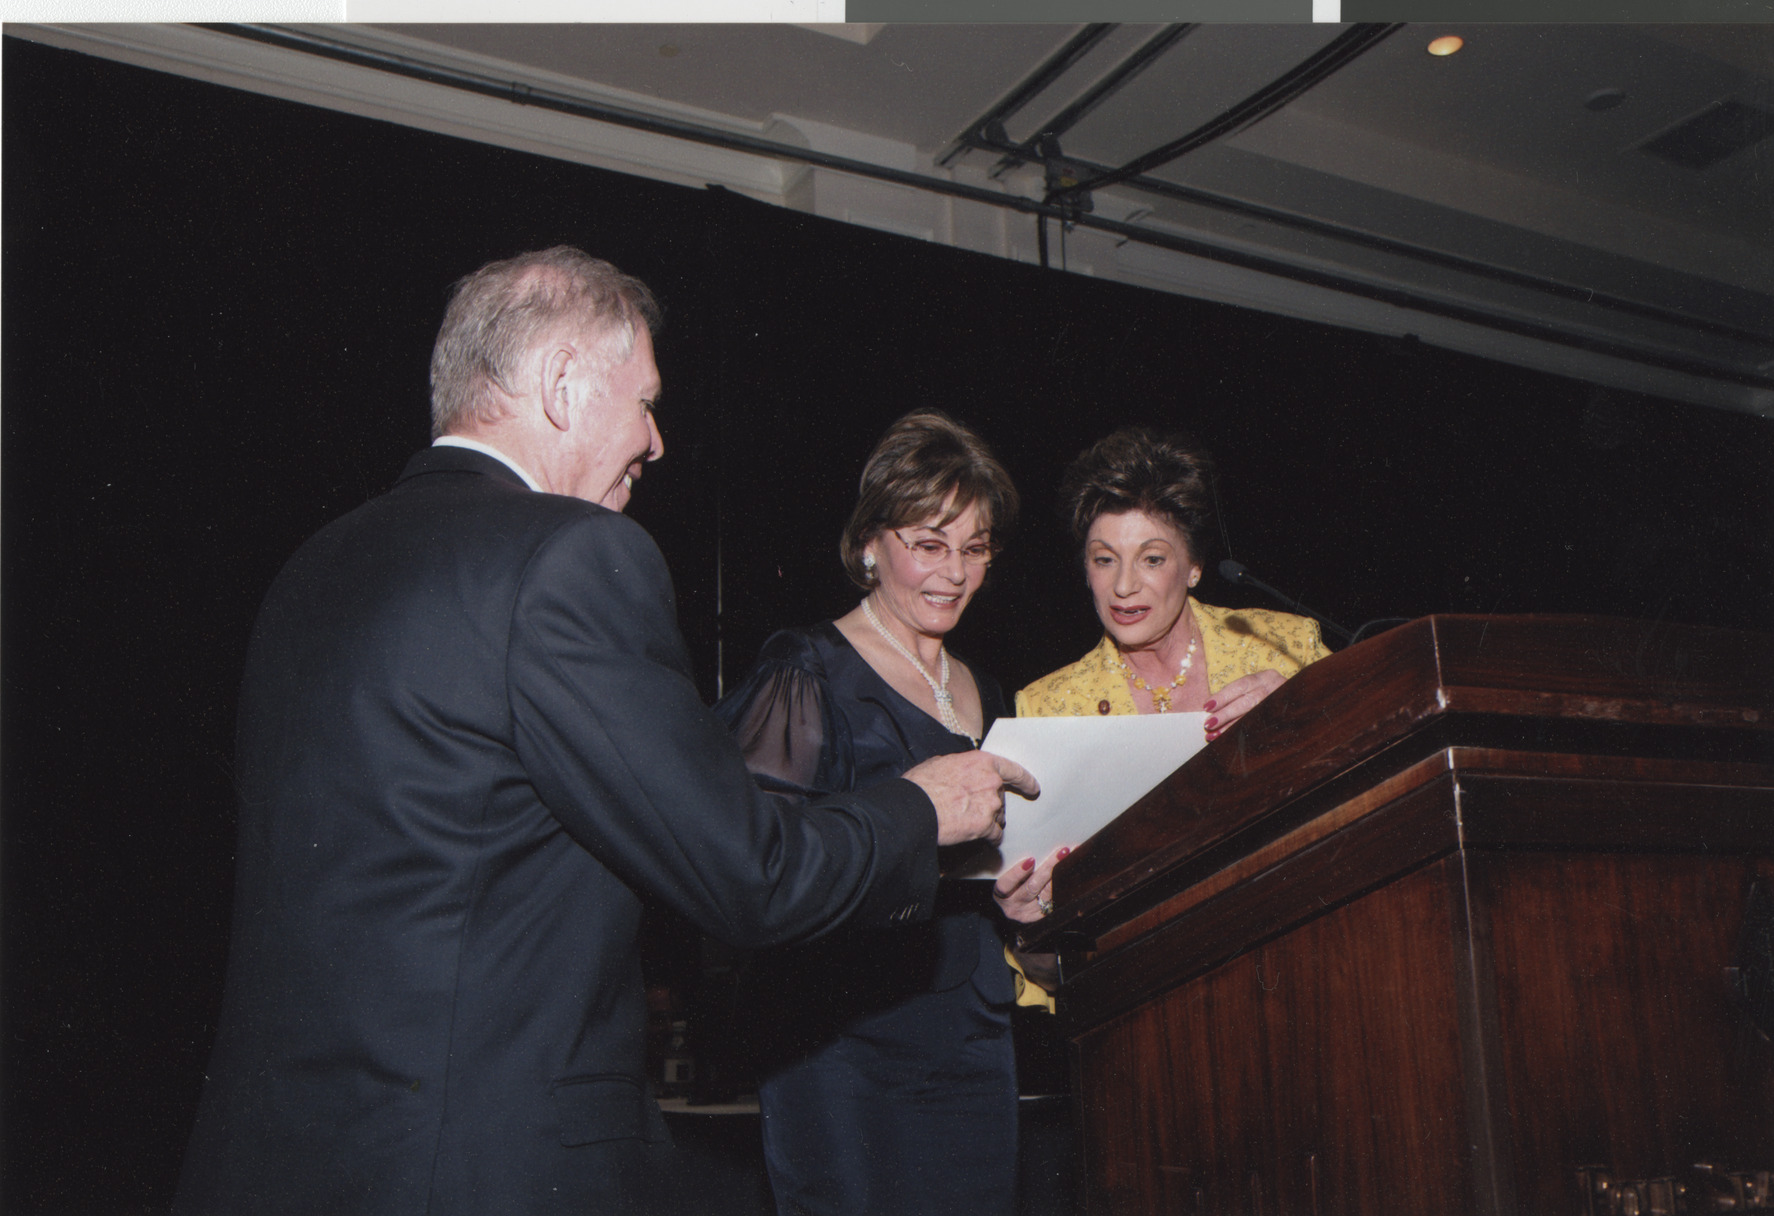 Photograph of Stuart and Flora Mason receiving a certificate from Shelley Berkley, April 2008